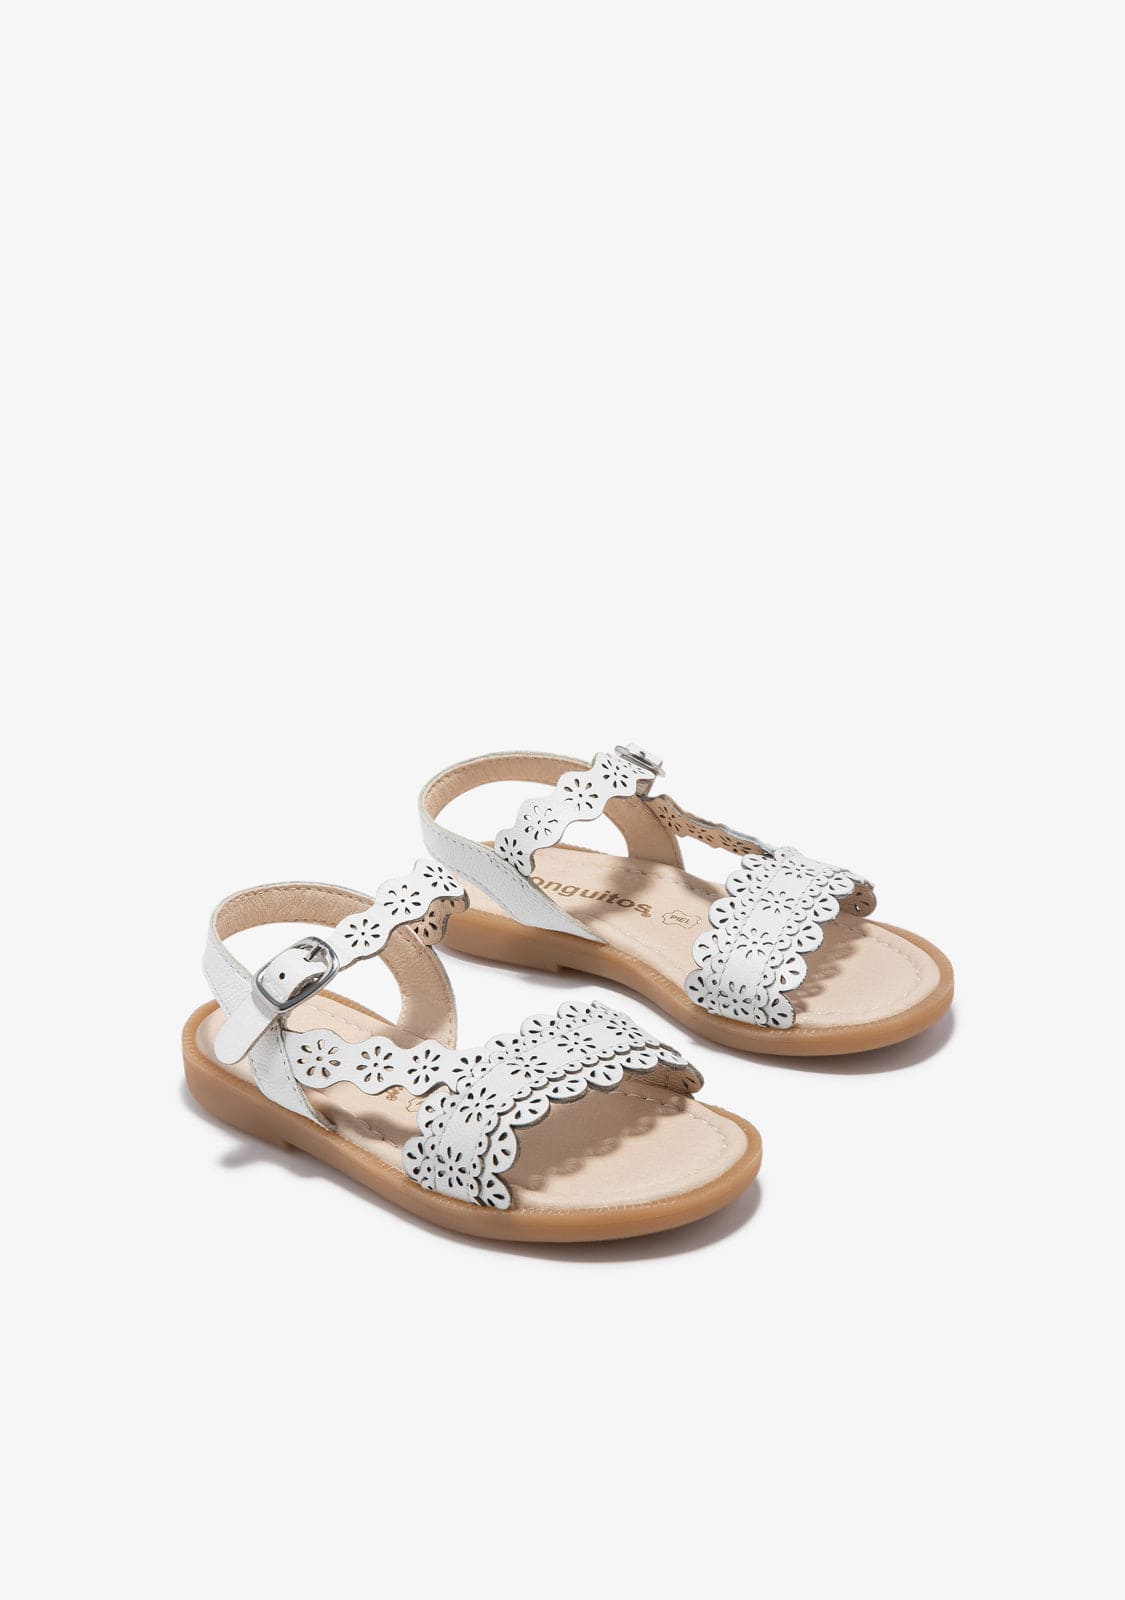 CONGUITOS HEBILLAS White Gold Texture Sandals